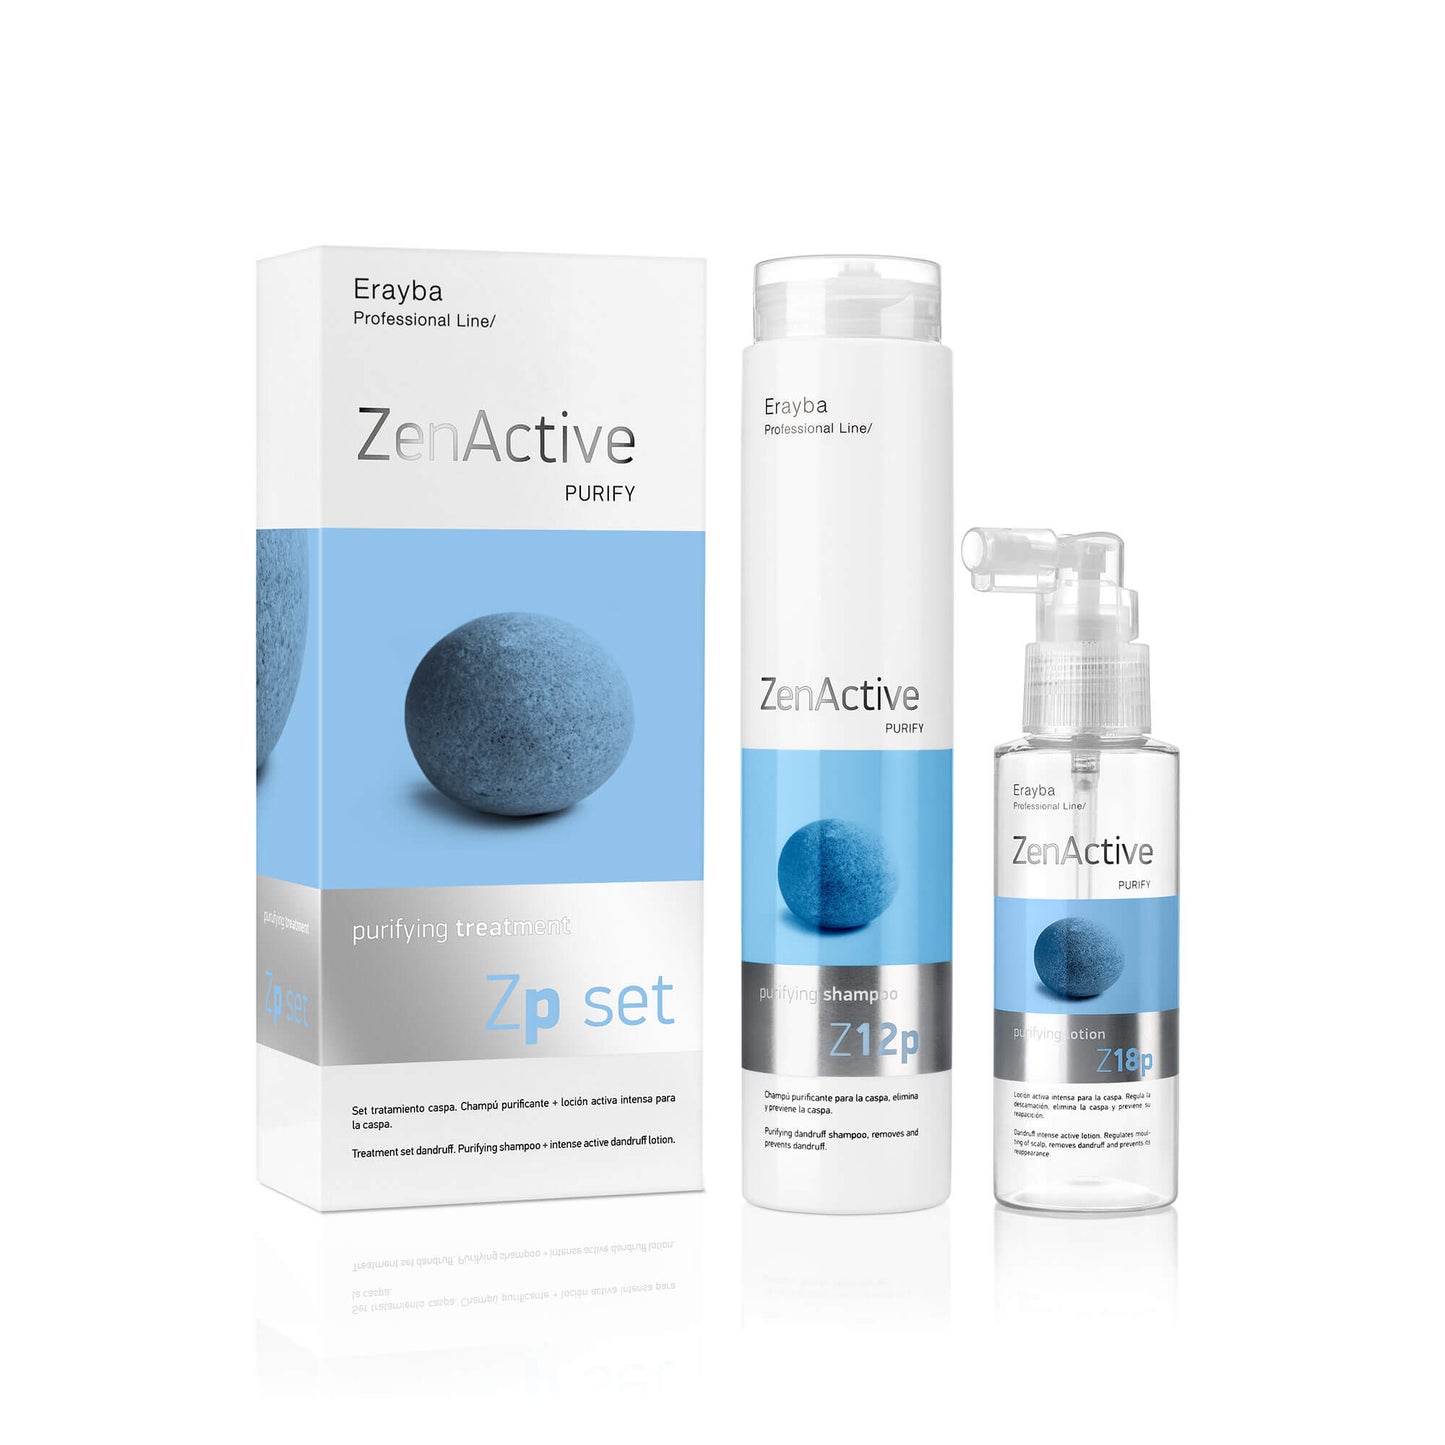 Zen Active Zp set purifying treatment